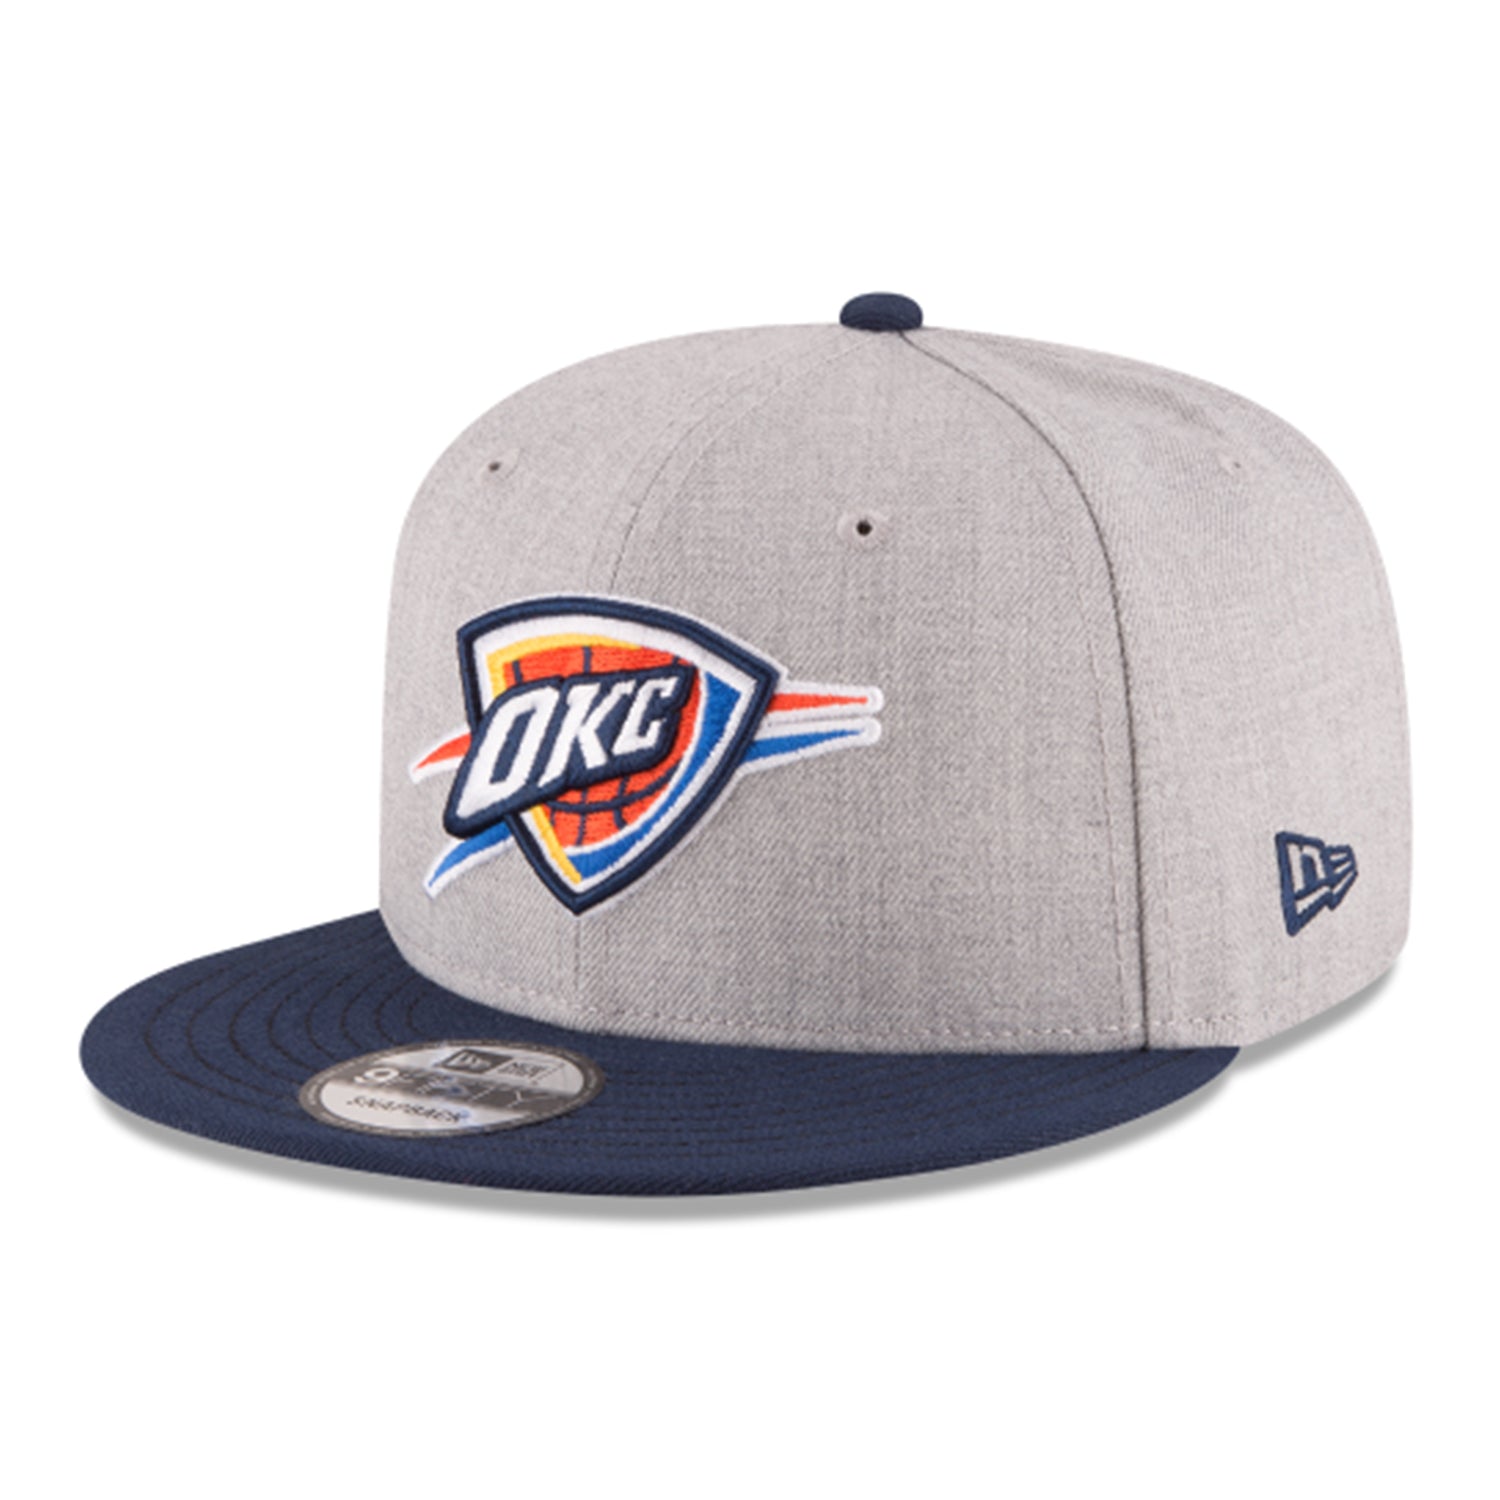 New Era Knicks Two-Tone 9Fifty Snapback Hat